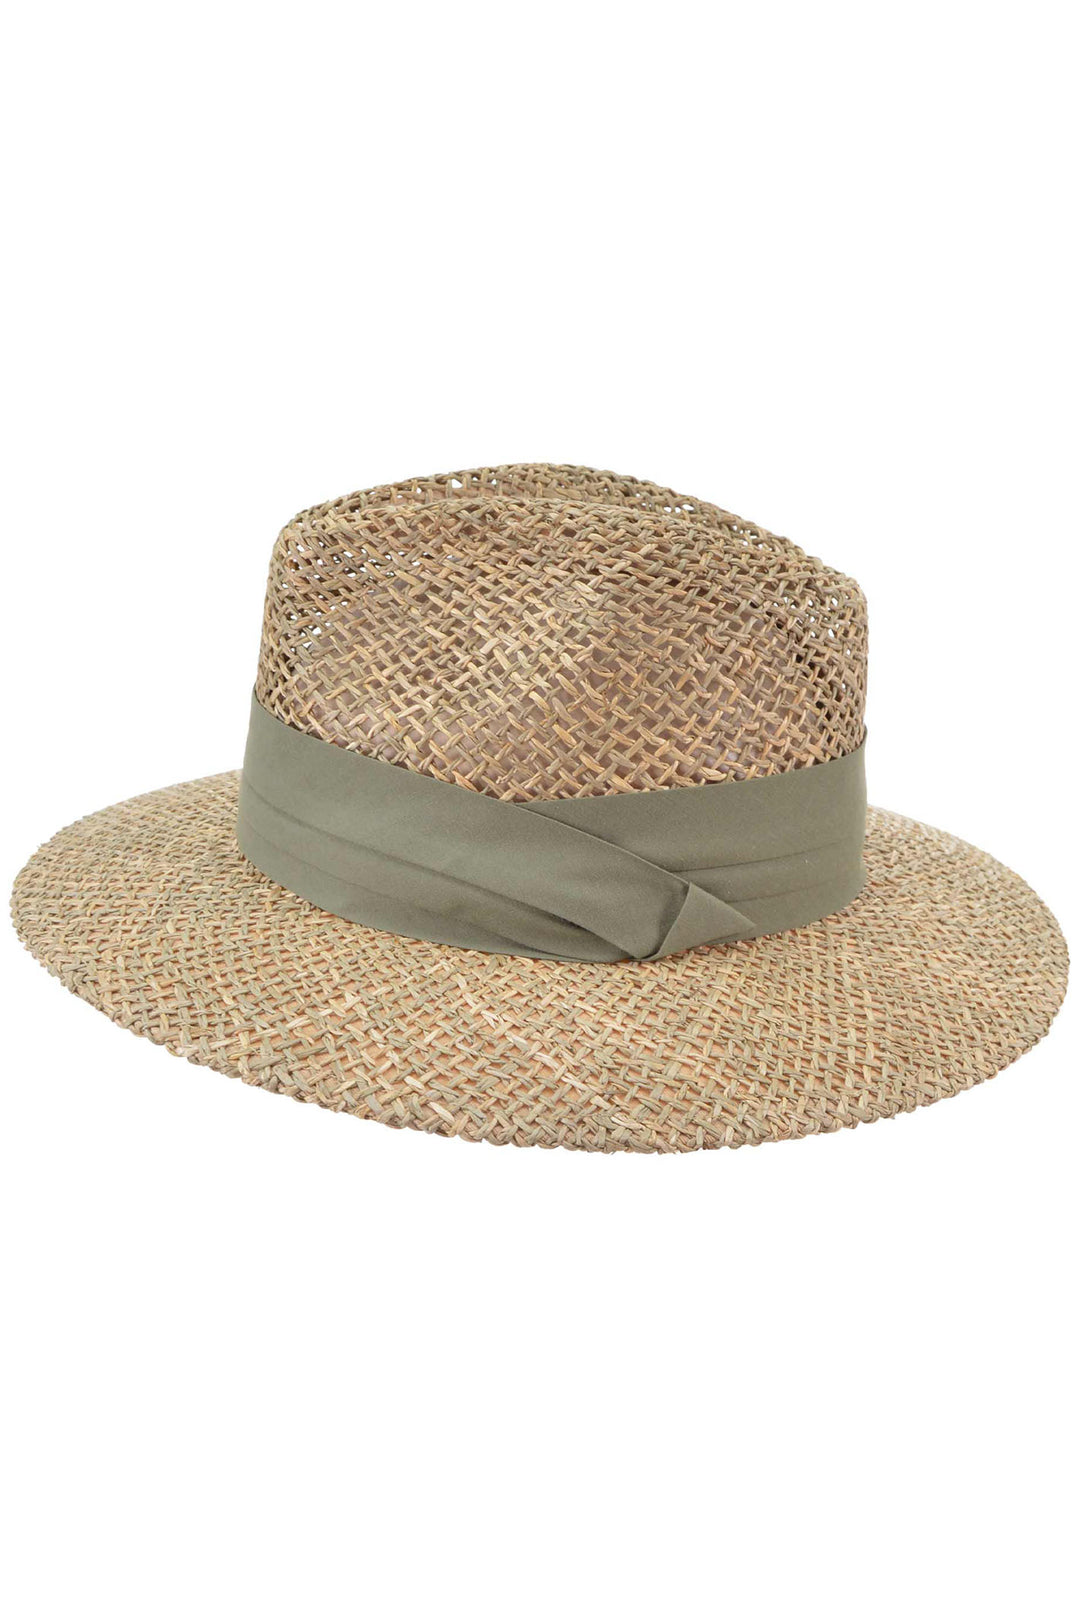 Seeberger 055097-00000 Natural Khaki Natural Straw Seagras Fedora Hat - Olivia Grace Fashion